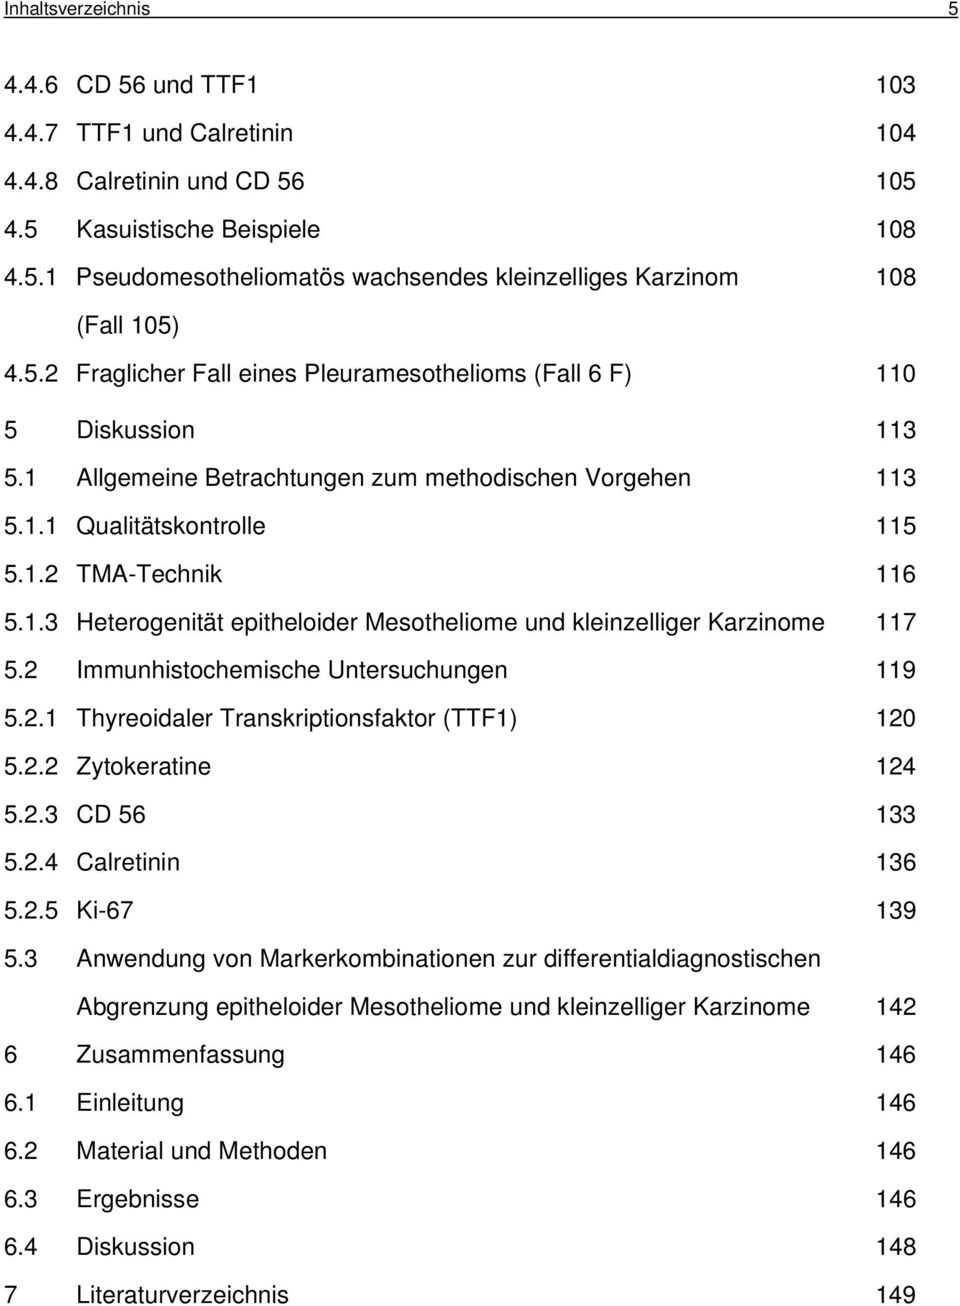 2 Immunhistochemische Untersuchungen 119 5.2.1 Thyreoidaler Transkriptionsfaktor (TTF1) 120 5.2.2 Zytokeratine 124 5.2.3 CD 56 133 5.2.4 Calretinin 136 5.2.5 Ki-67 139 5.